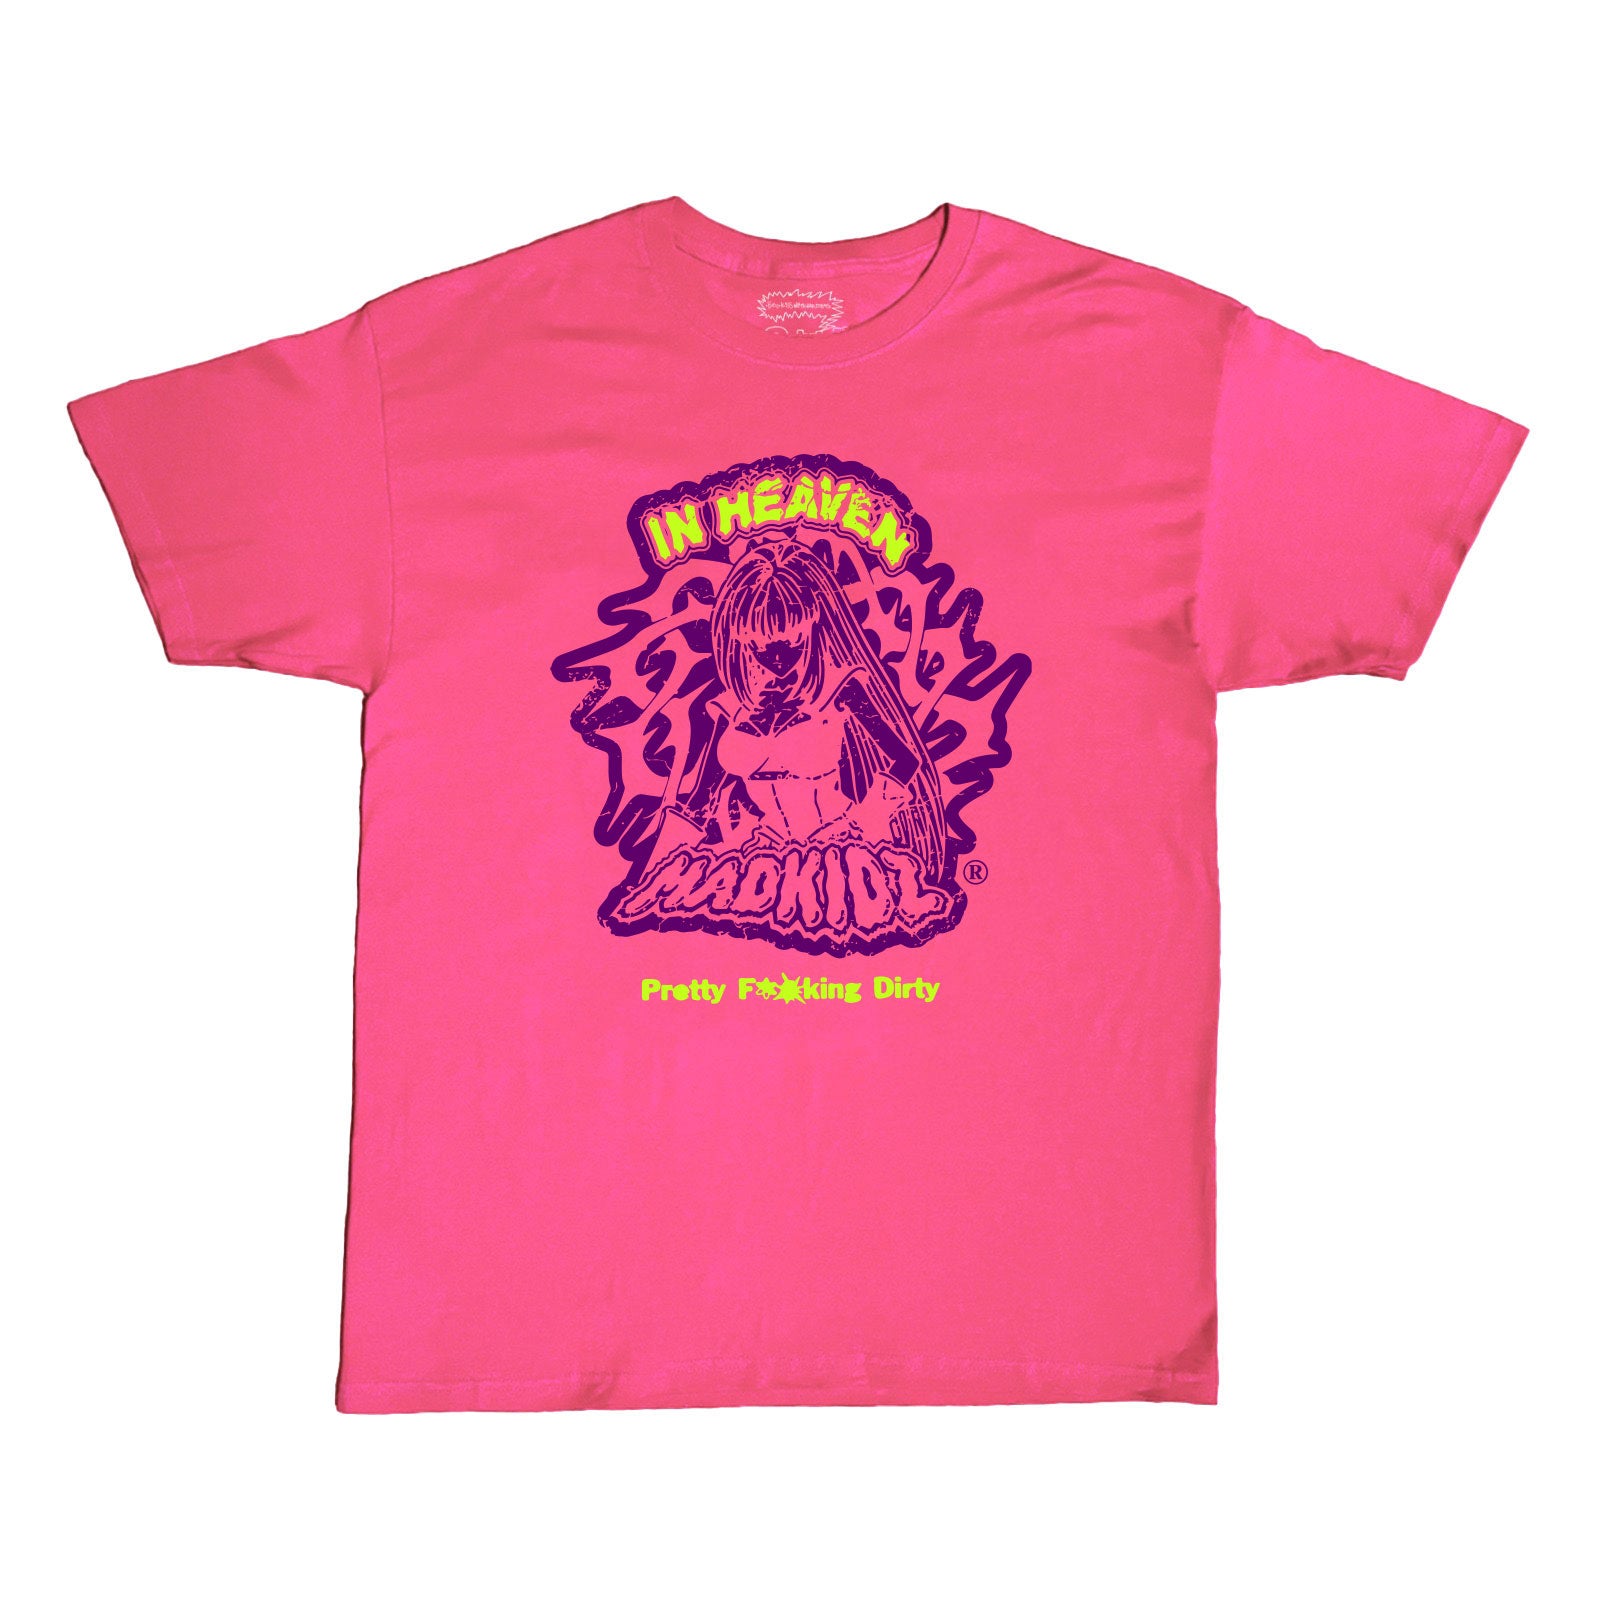 In heaven T-Shirt Garment Dye (Soft Pink)